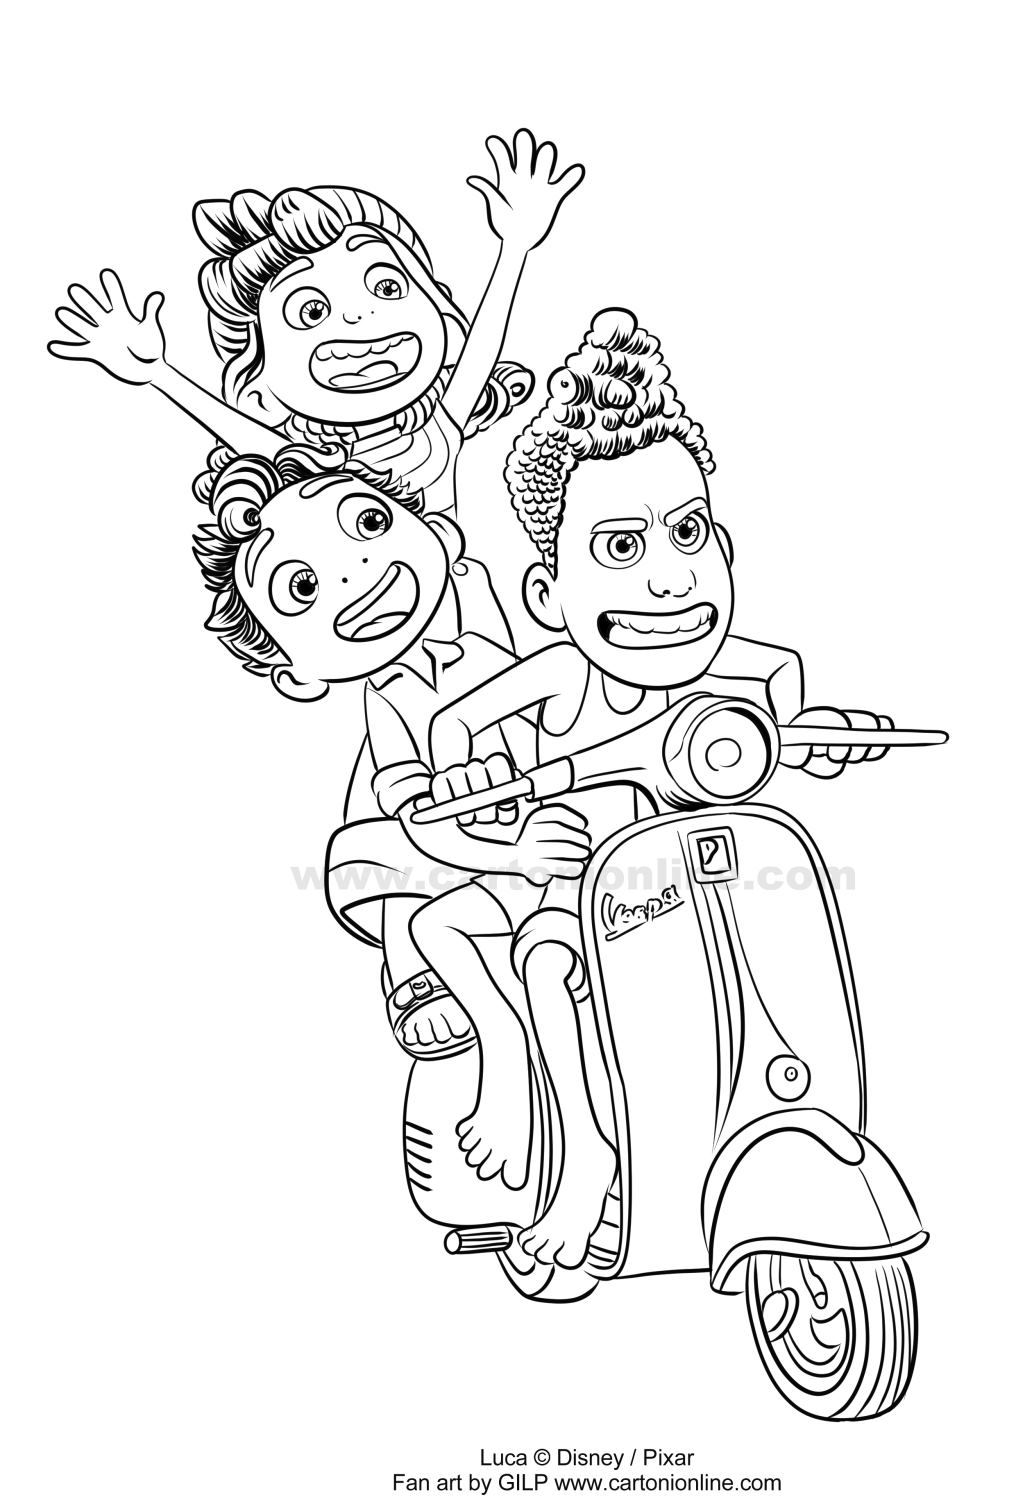 Desenho de Luca, Albero, Giulia, Vespa de Luca (Disney/Pixar) para imprimir e colorir